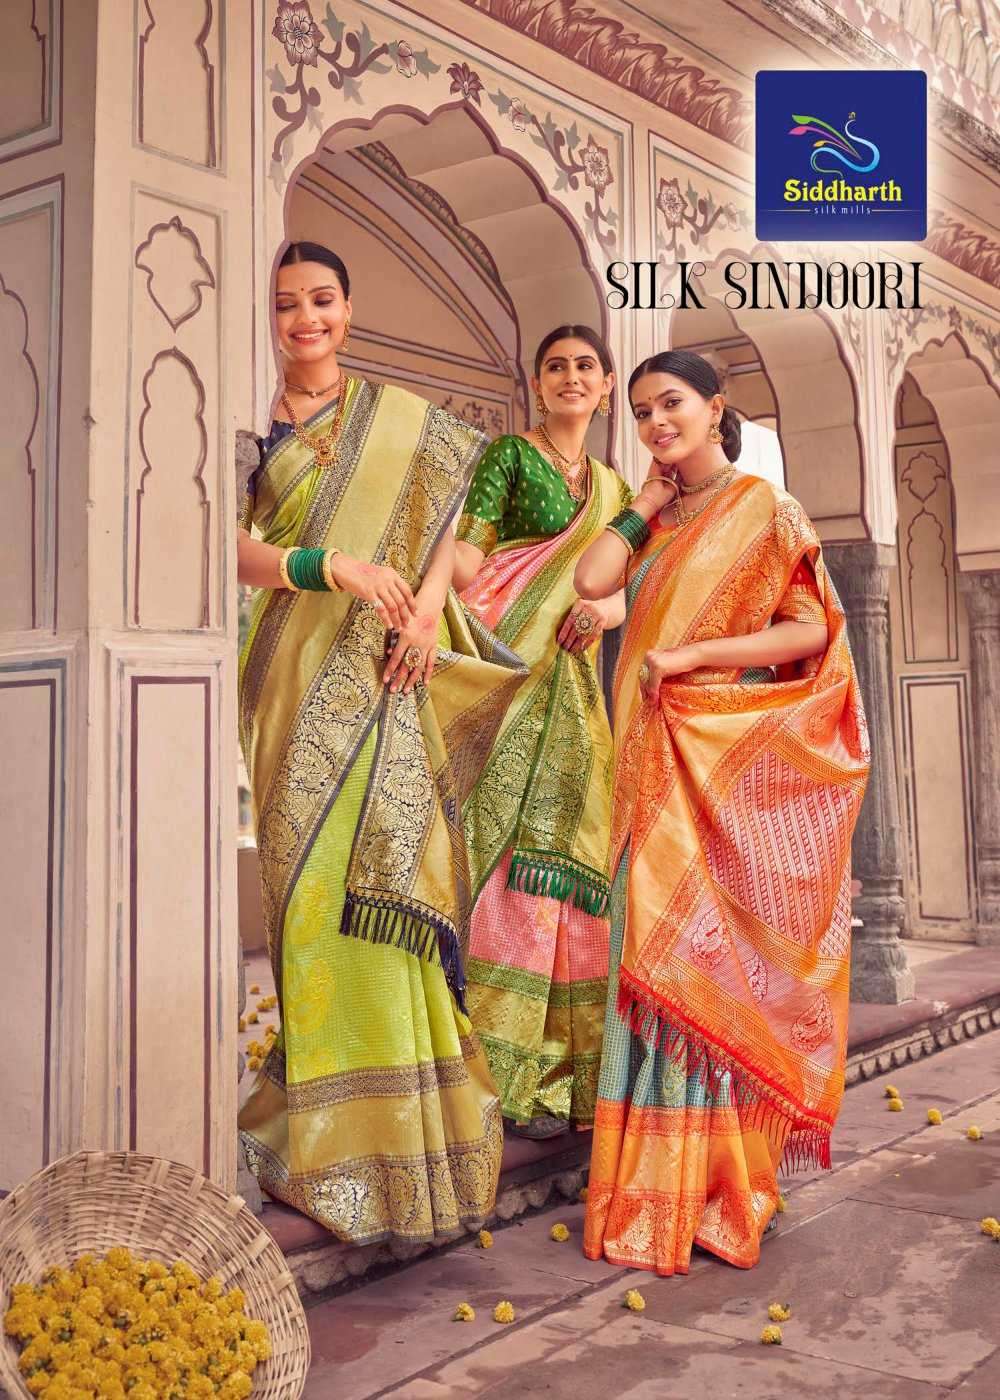 siddharth silk mills silk sindoori series 90001-90006 silk saree